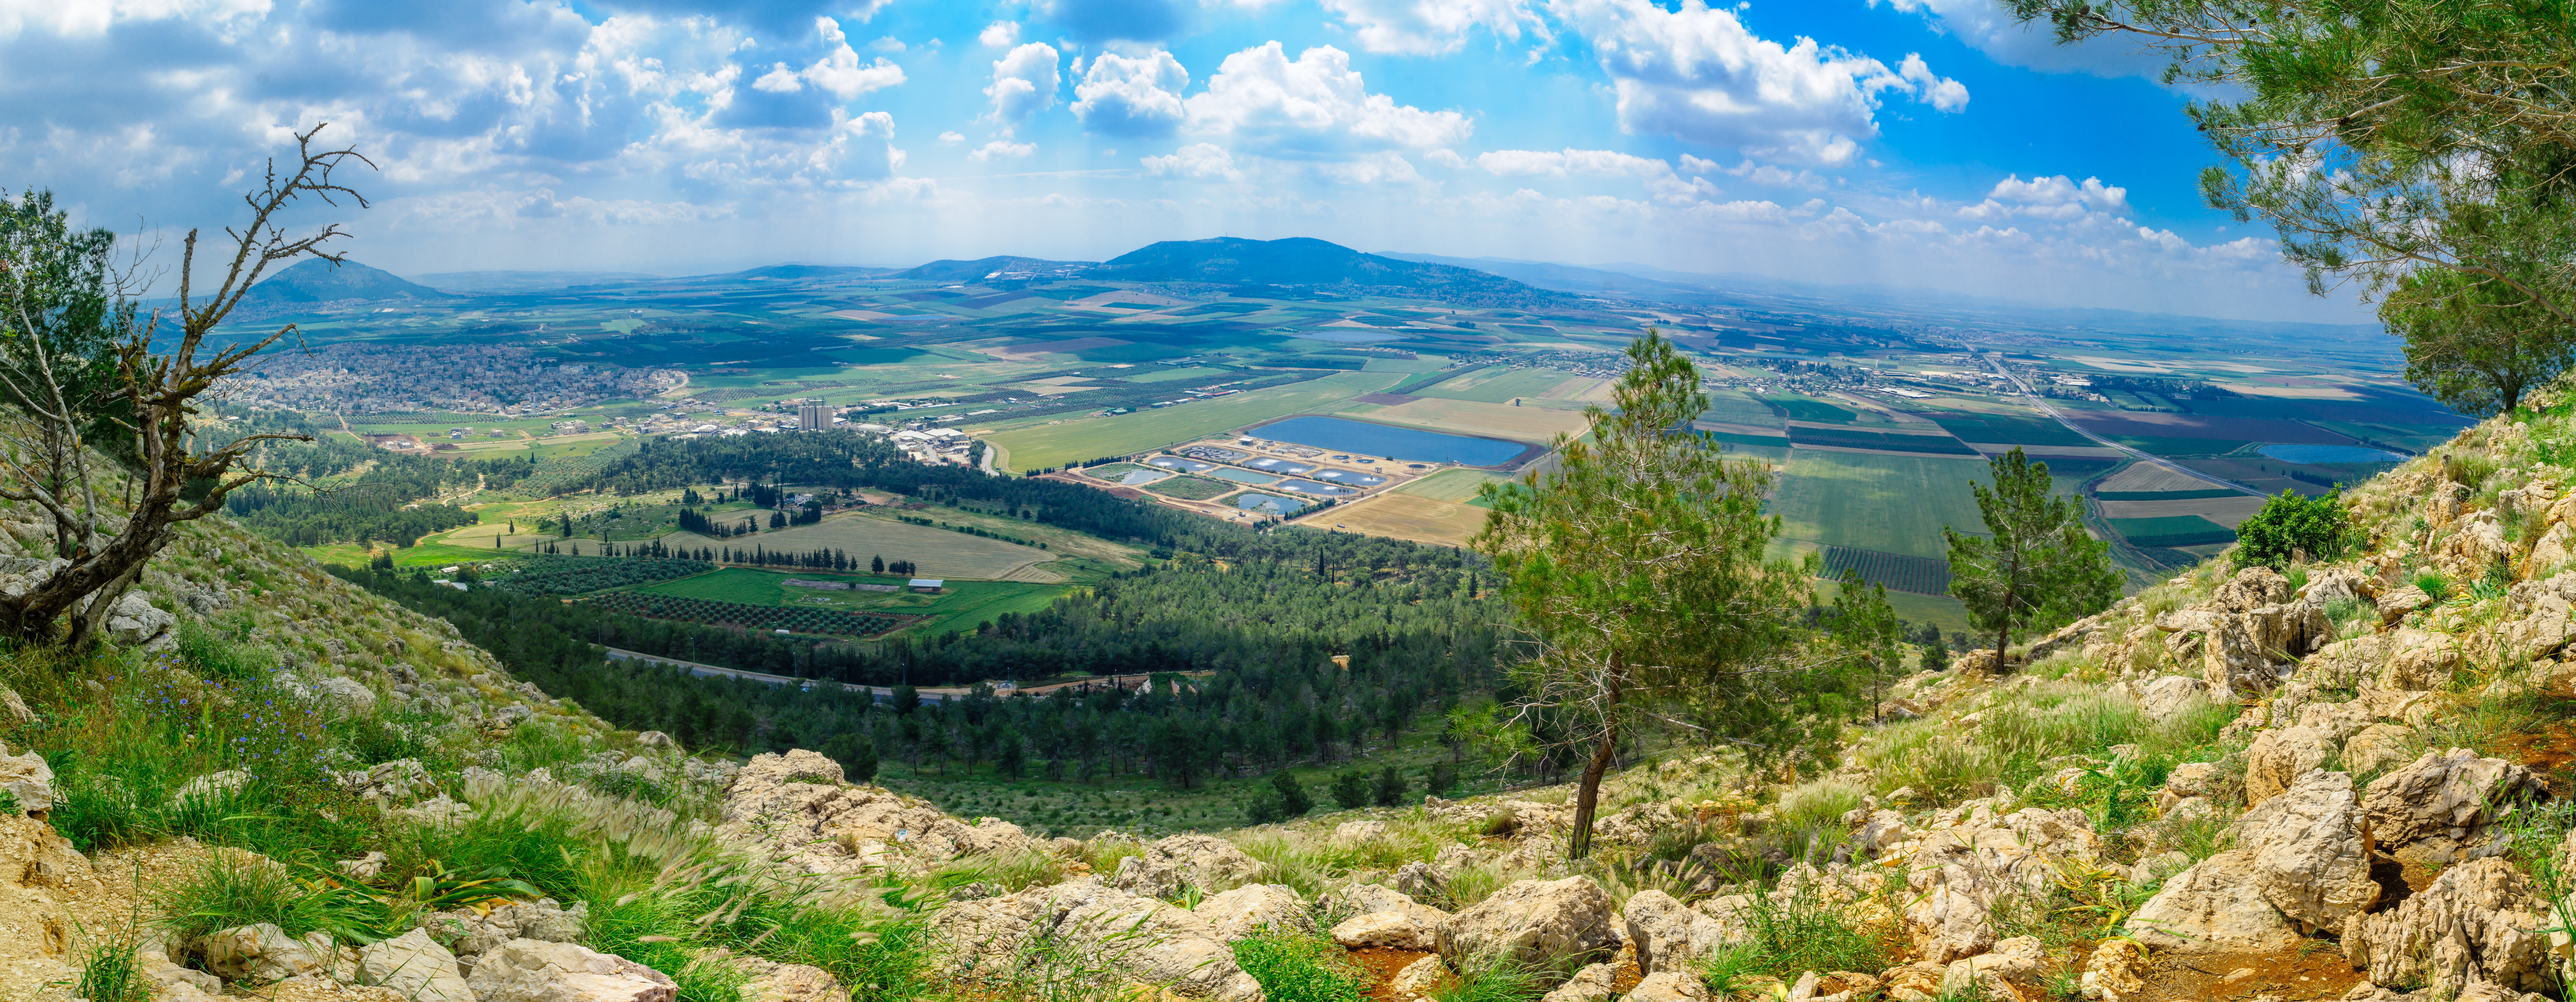 Jezreel Valley Landscape